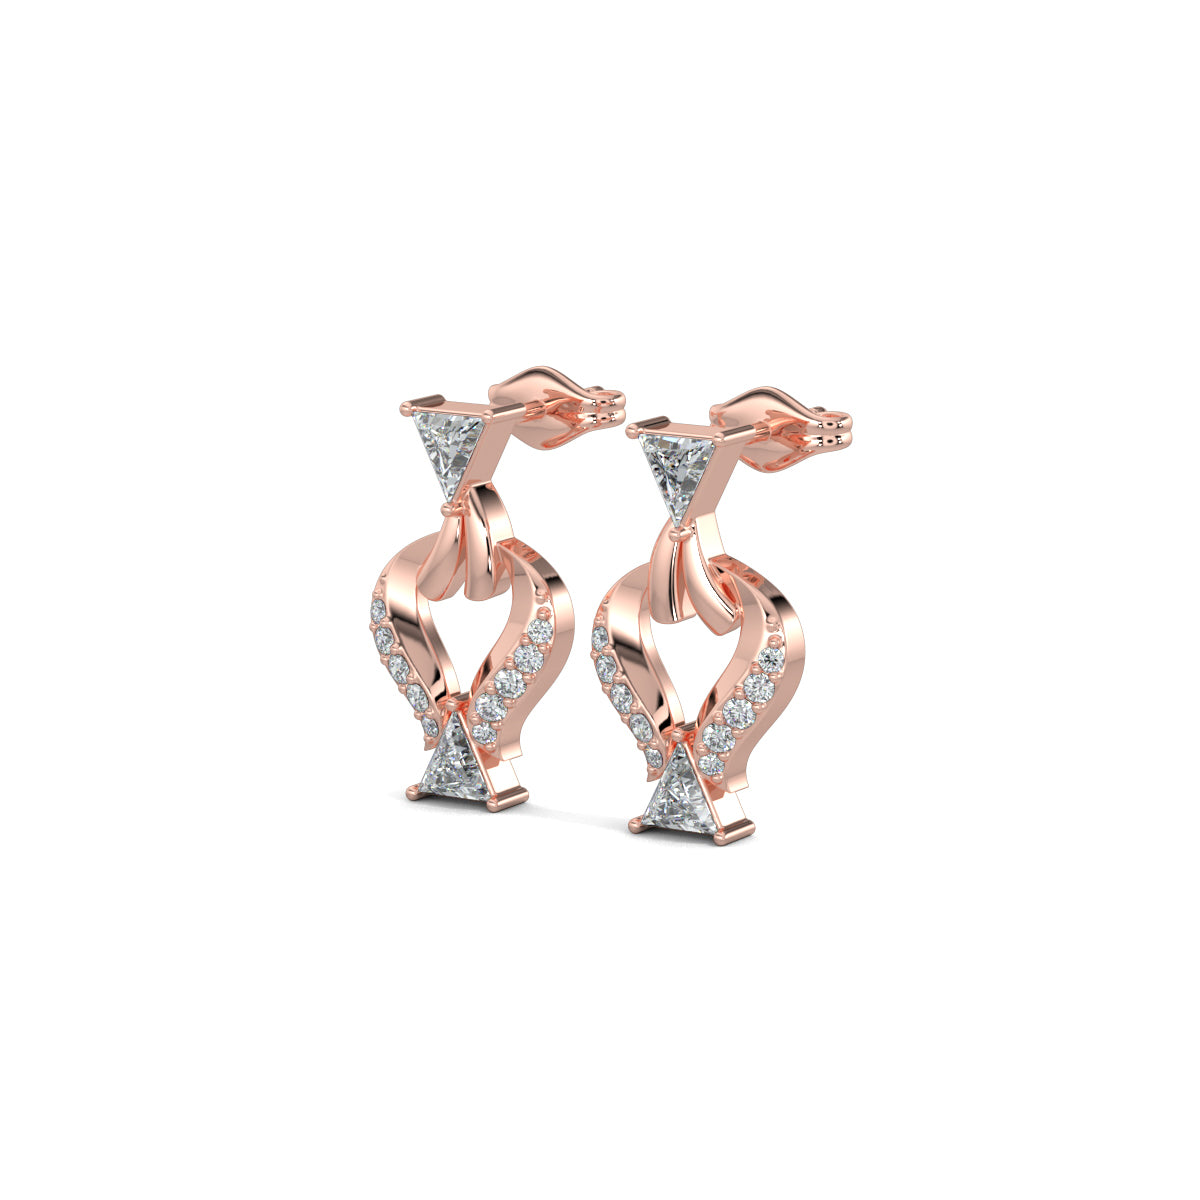 Rose Gold, Diamond Earrings, Trillium Sparkle Earrings, Mid-length Earrings, Natural Diamonds, Lab-grown Diamonds, Trillion-cut Diamonds, Round Diamonds, Sophisticated Earrings, Elegant Jewelry